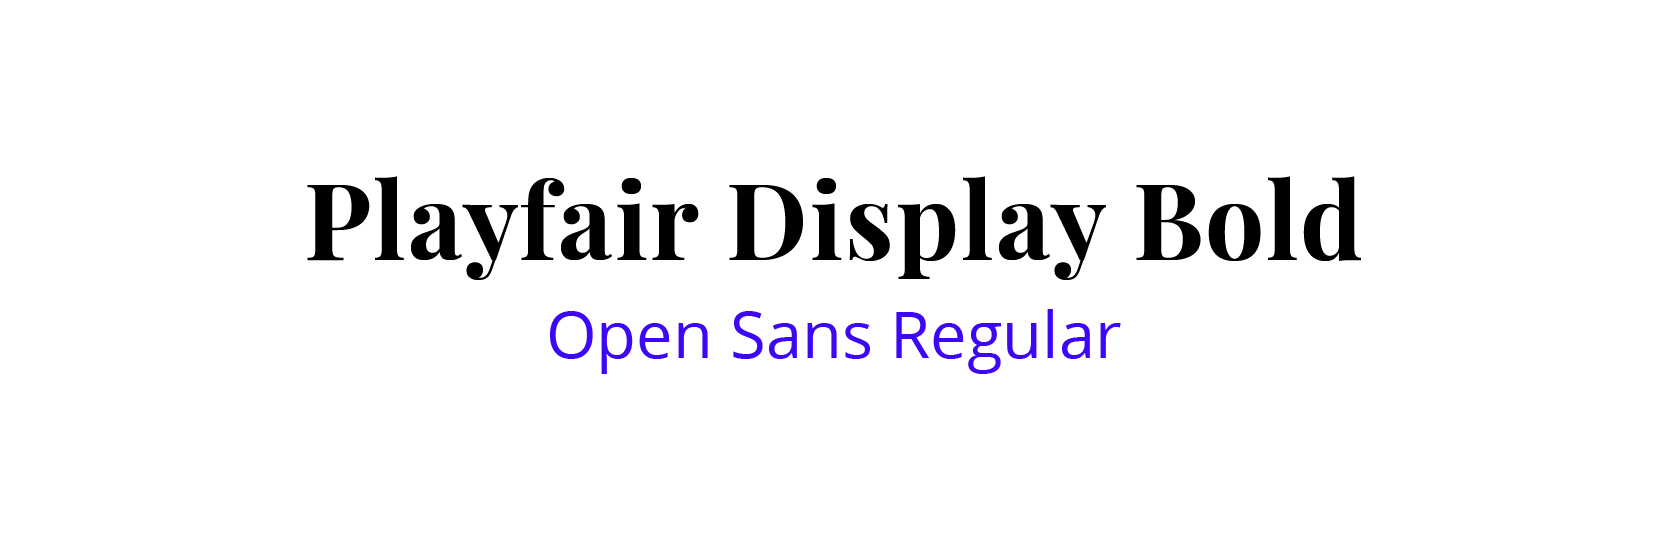 Combinar tipografías Playfair Display Bold y Open Sans Regular